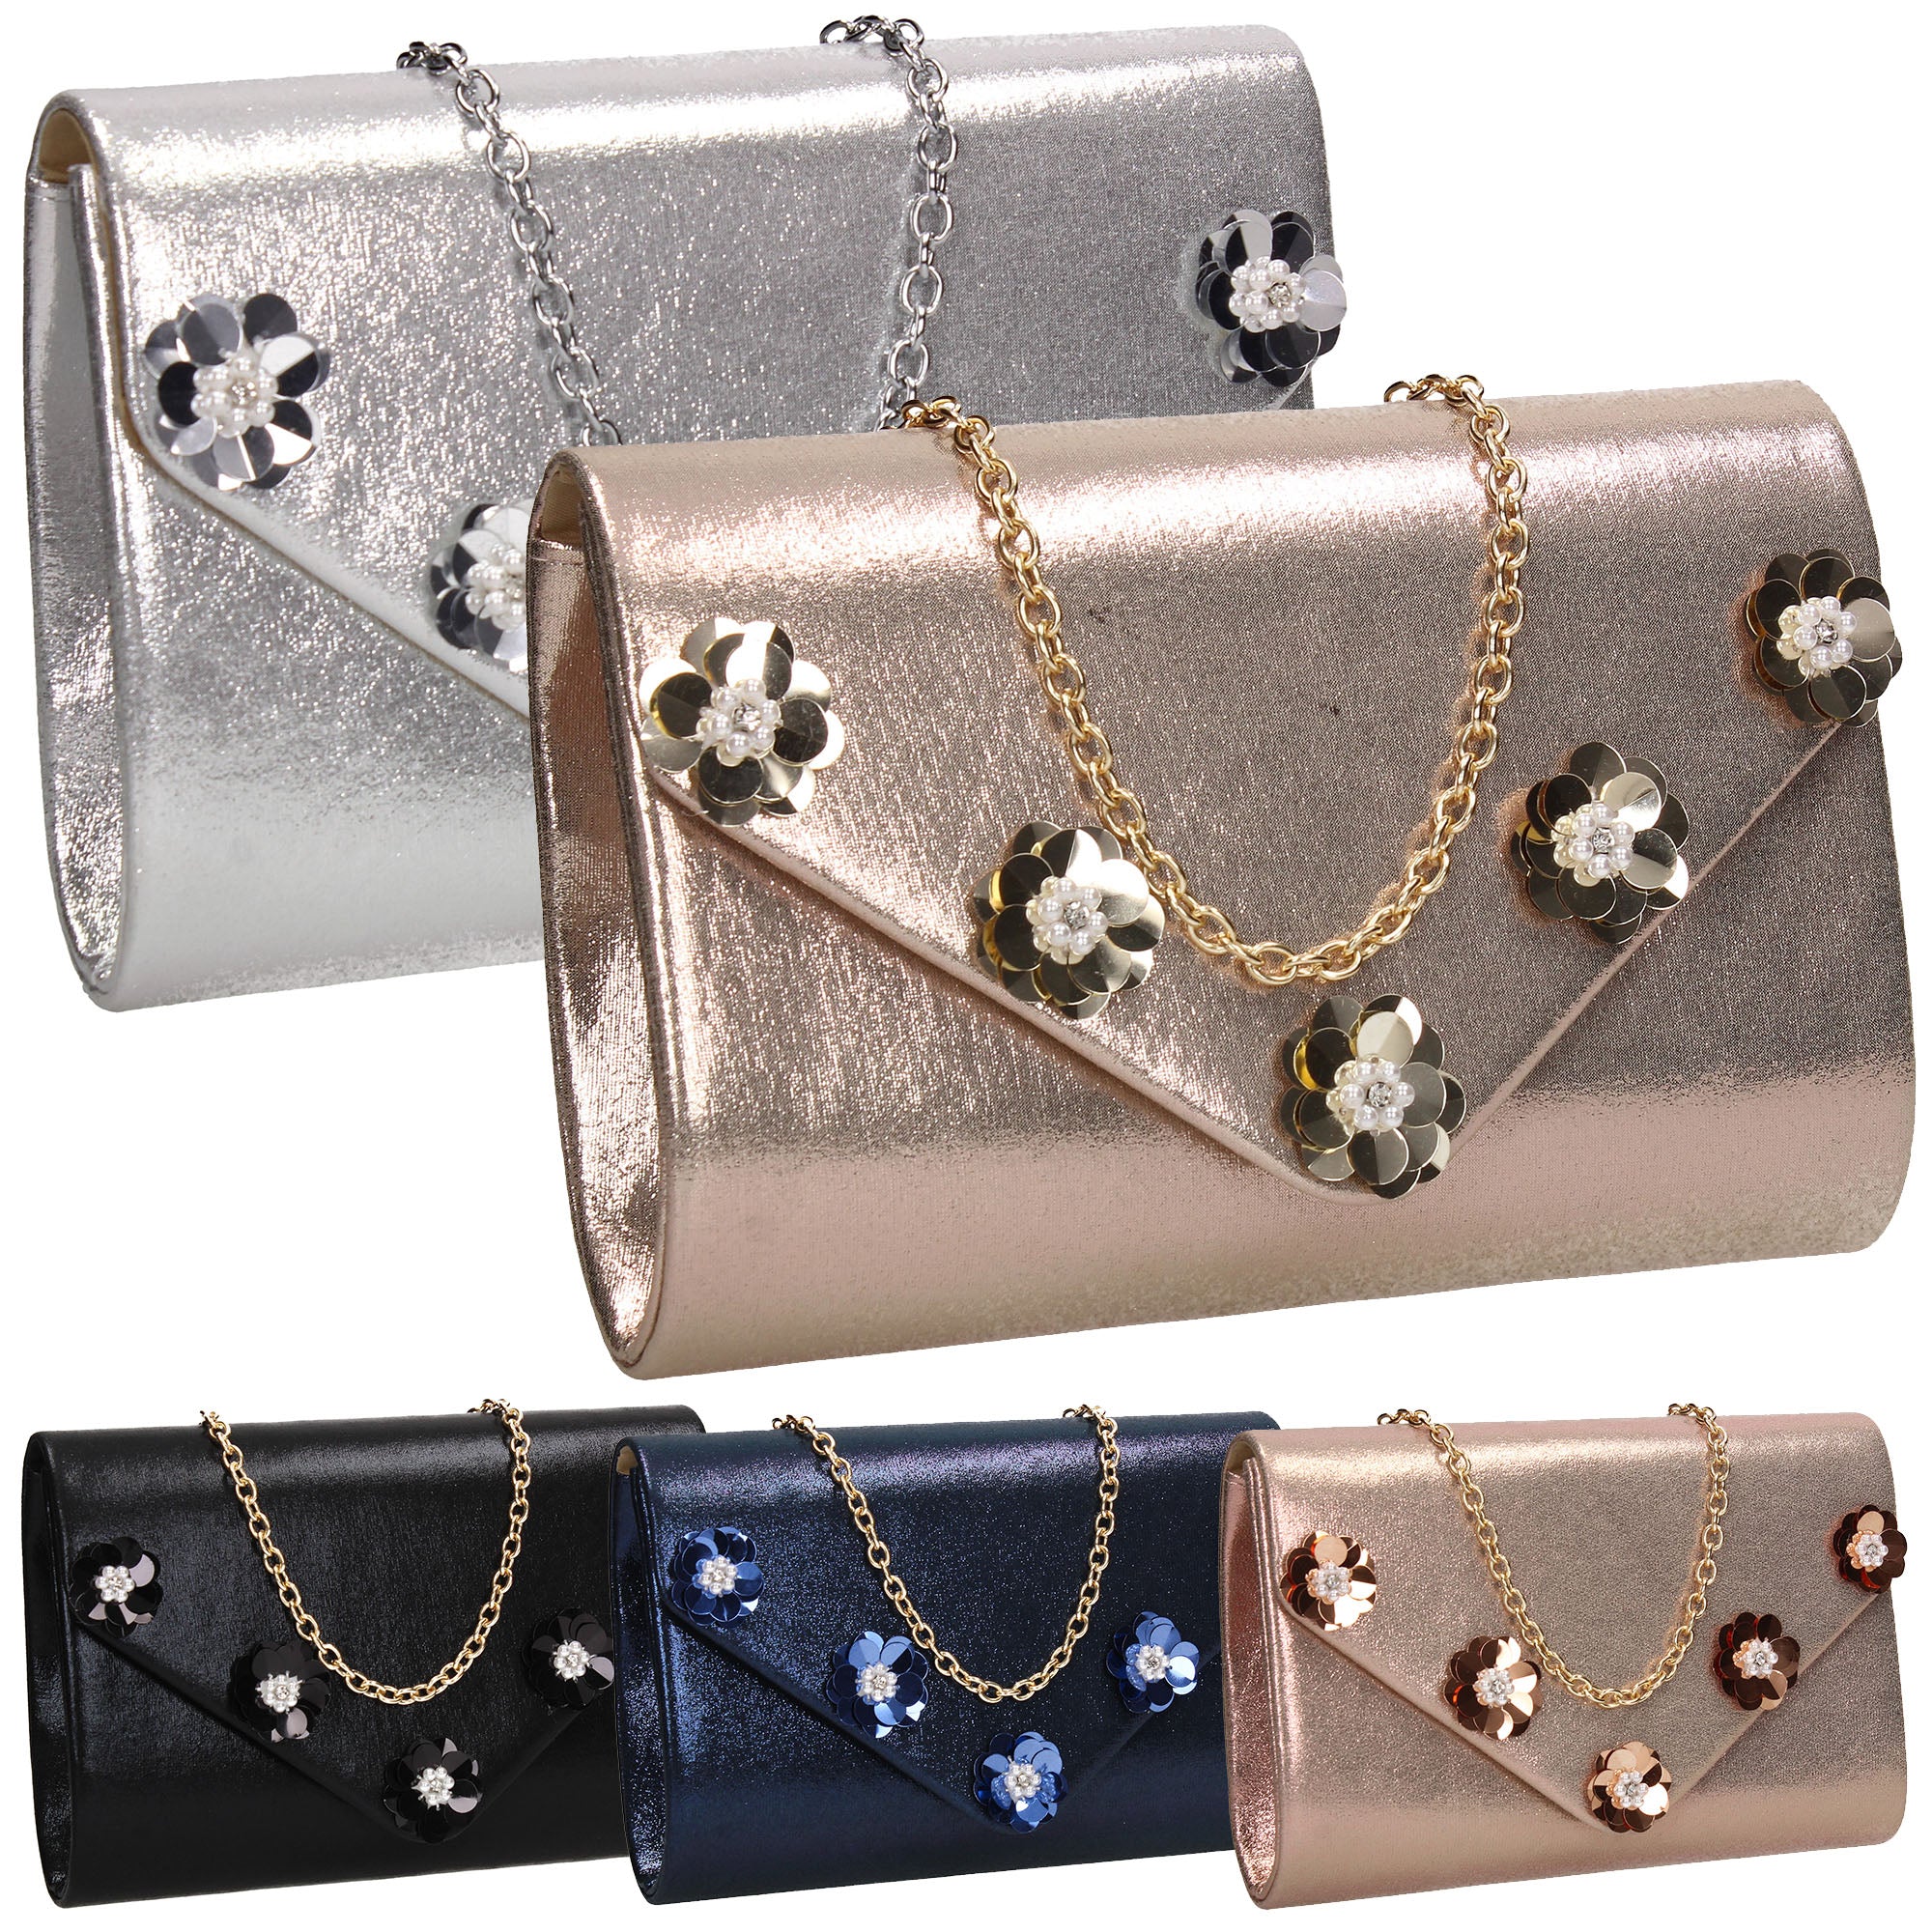 Evening clutch - Women's handbag - Champagne color